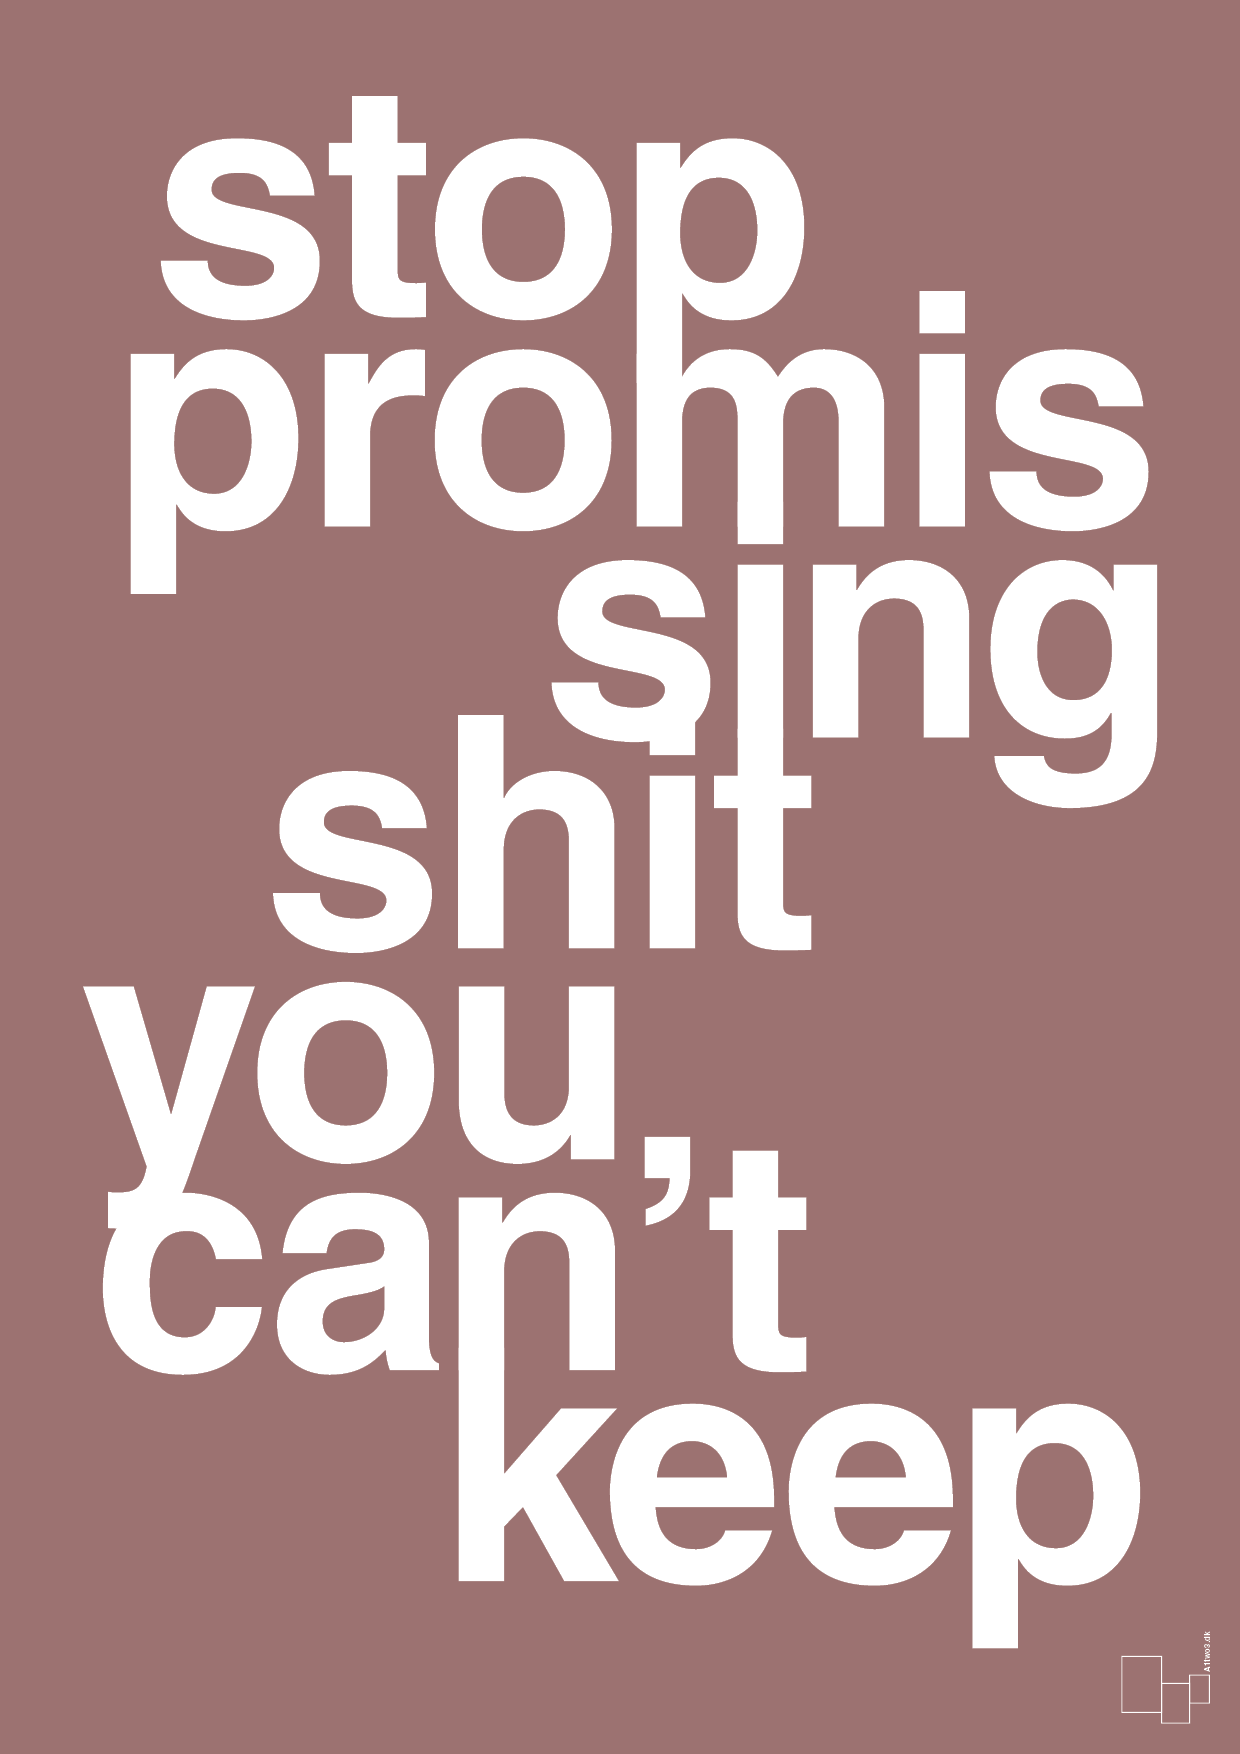 stop promissing shit you cant keep - Plakat med Ordsprog i Plum